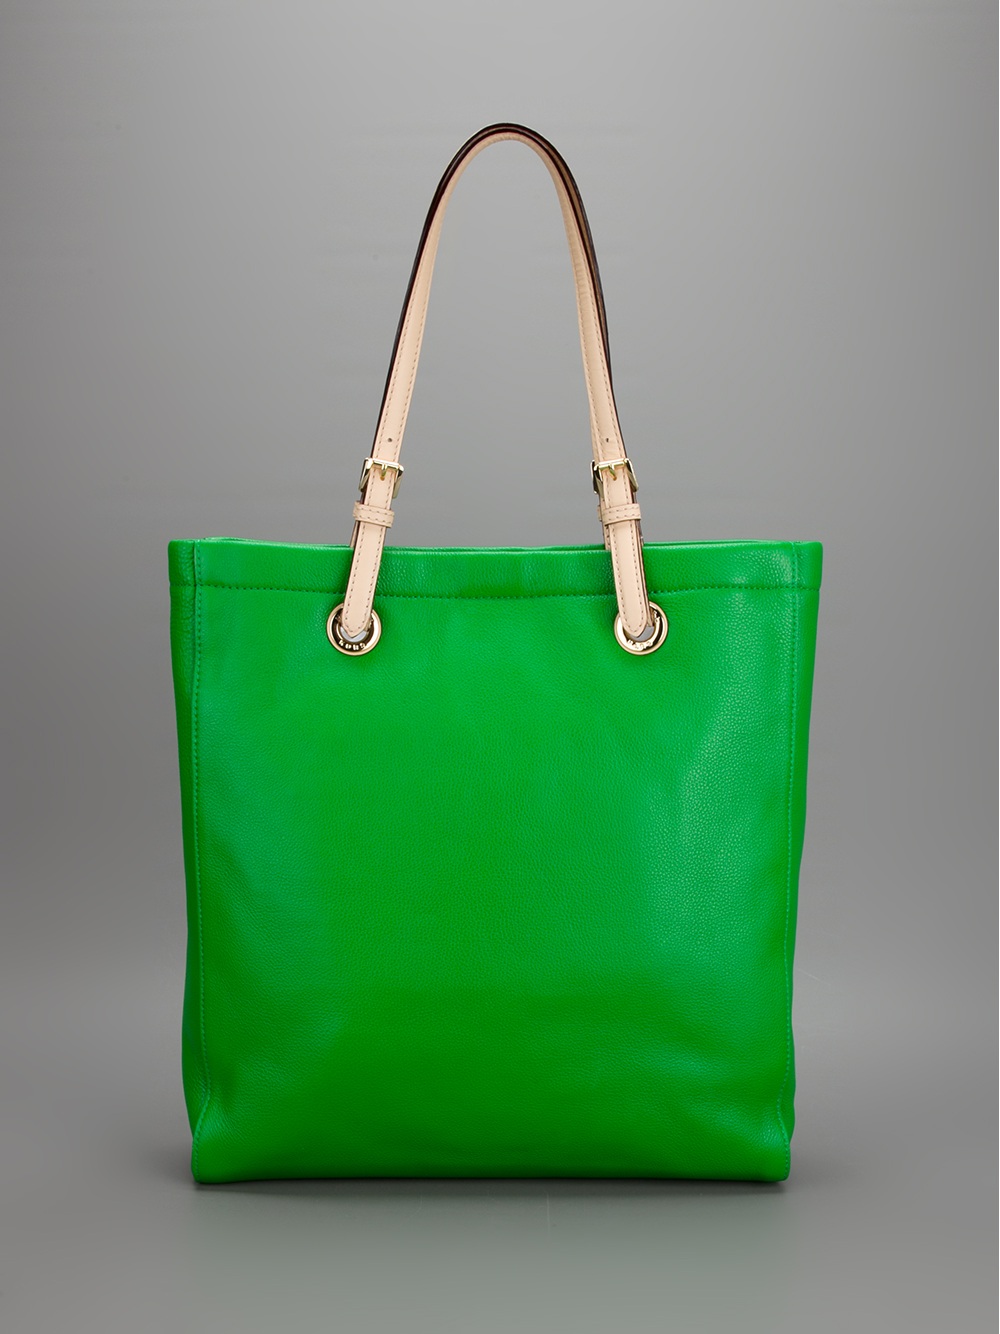 Michael Kors Shoulder Bag in Green - Lyst